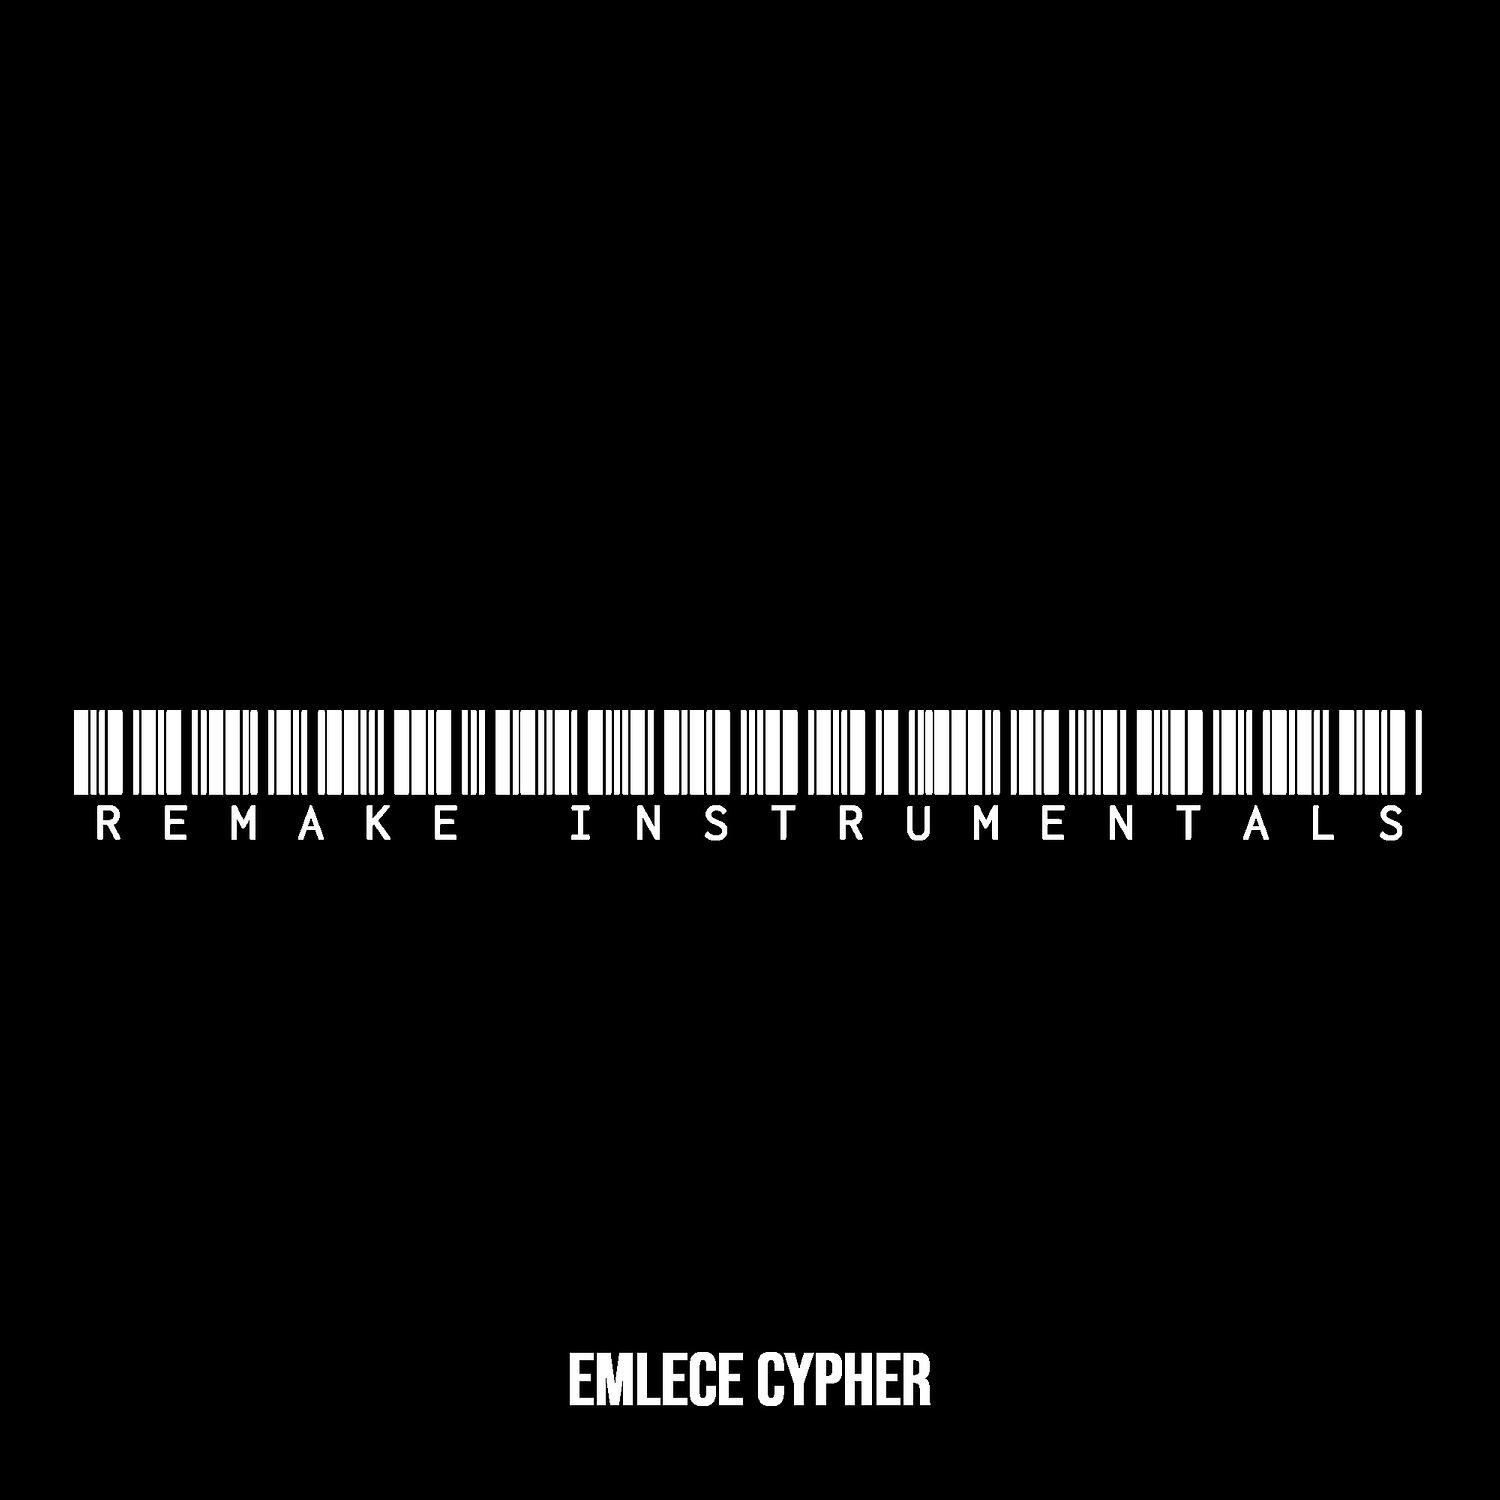 Emlece Cypher - Monalisa Remake